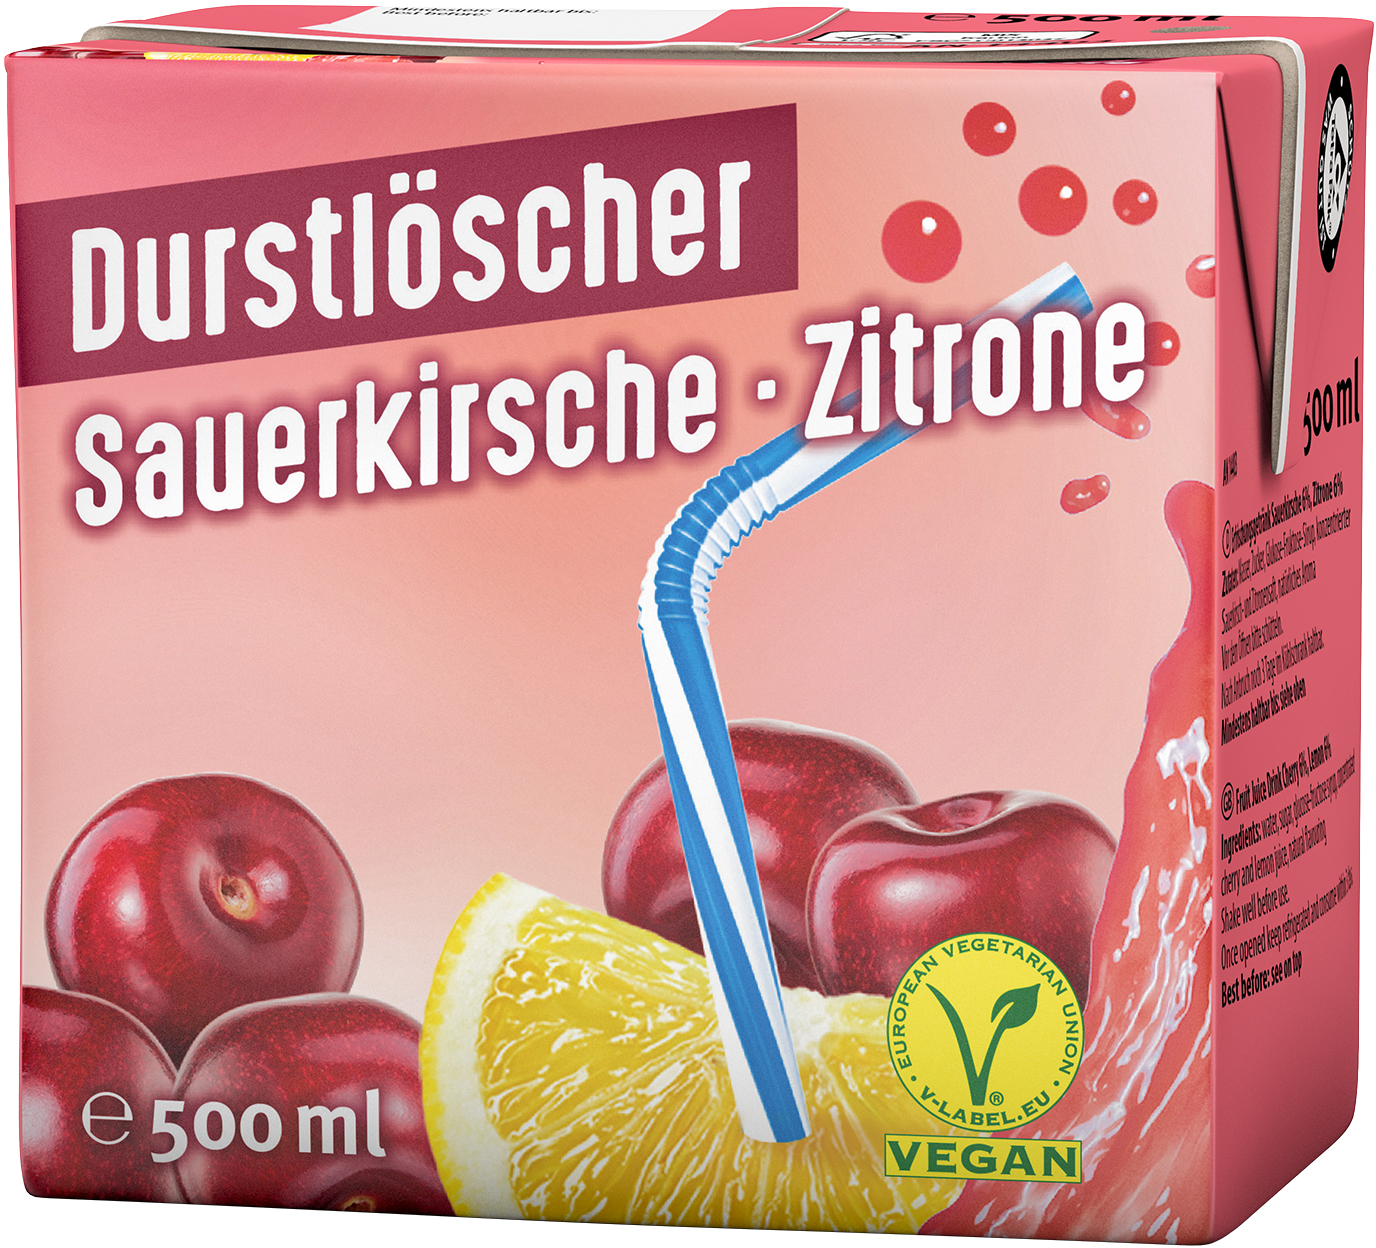 Durstlöscher Sauerkirsch Zitrone Karton 12 x 0,5 l Tetra-Pack